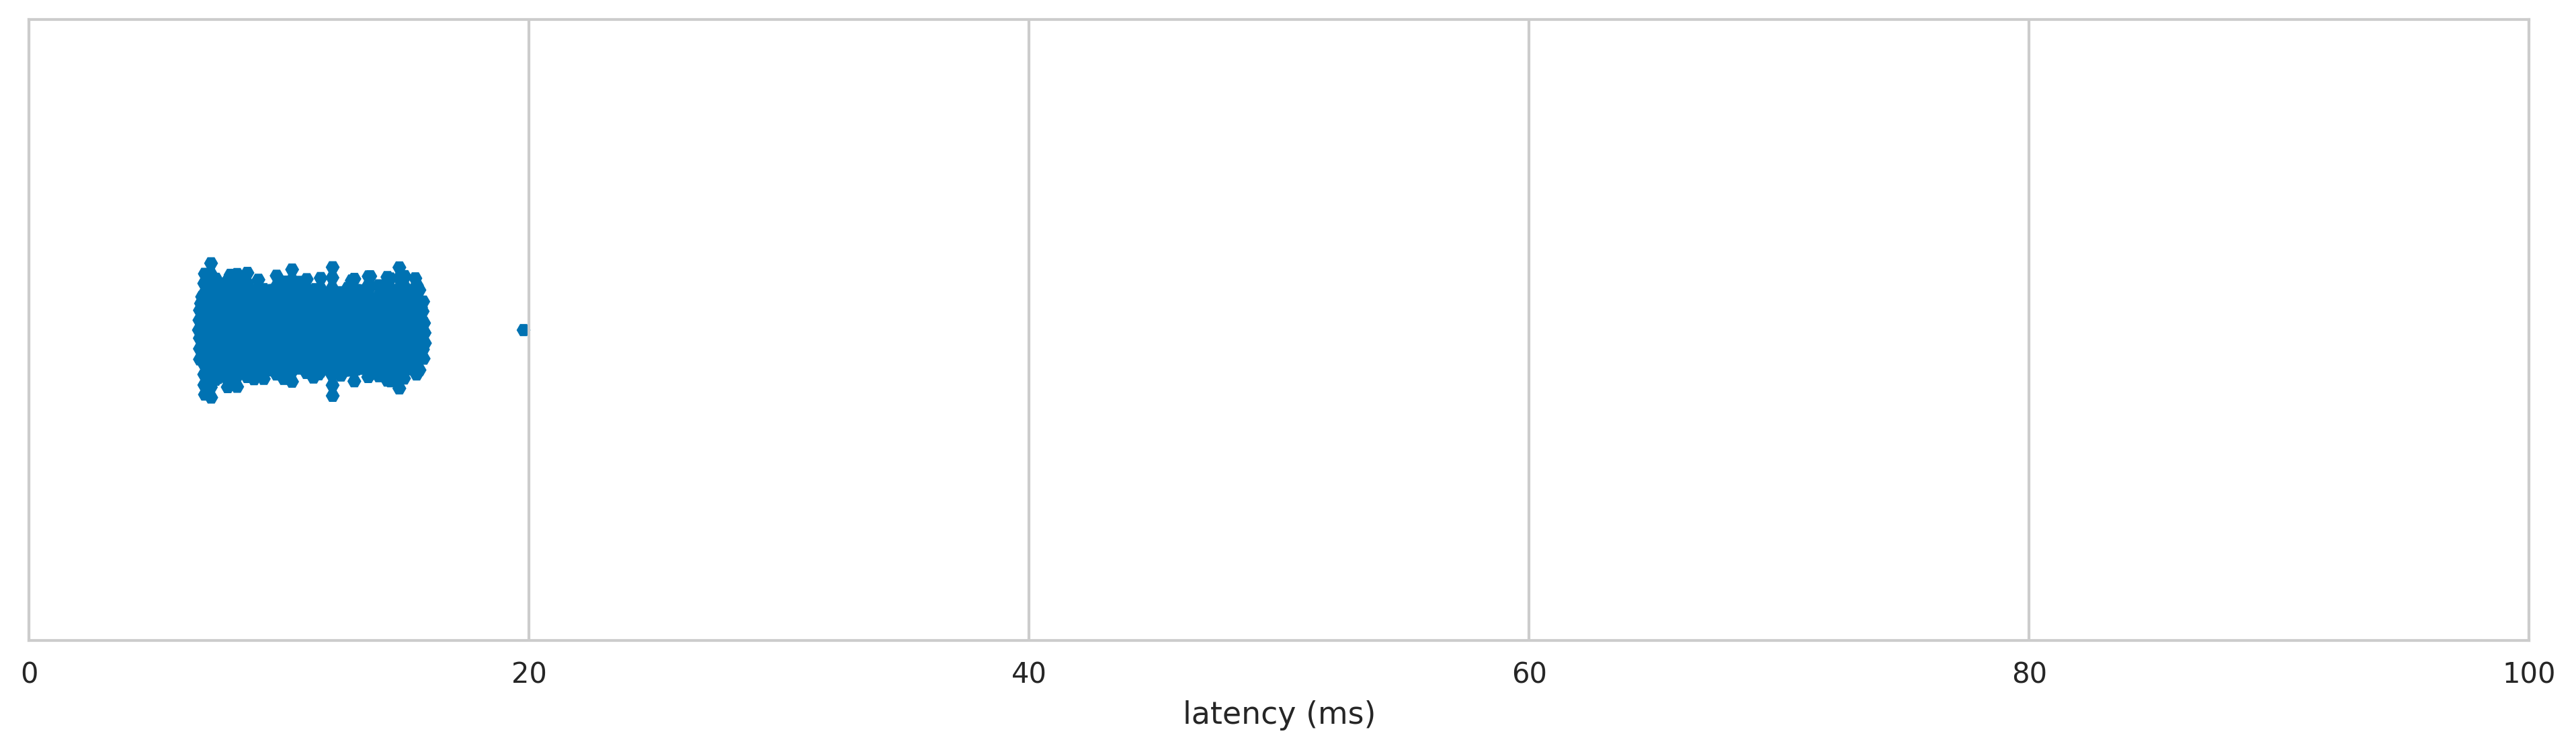 Logitech G9 latency distribution 